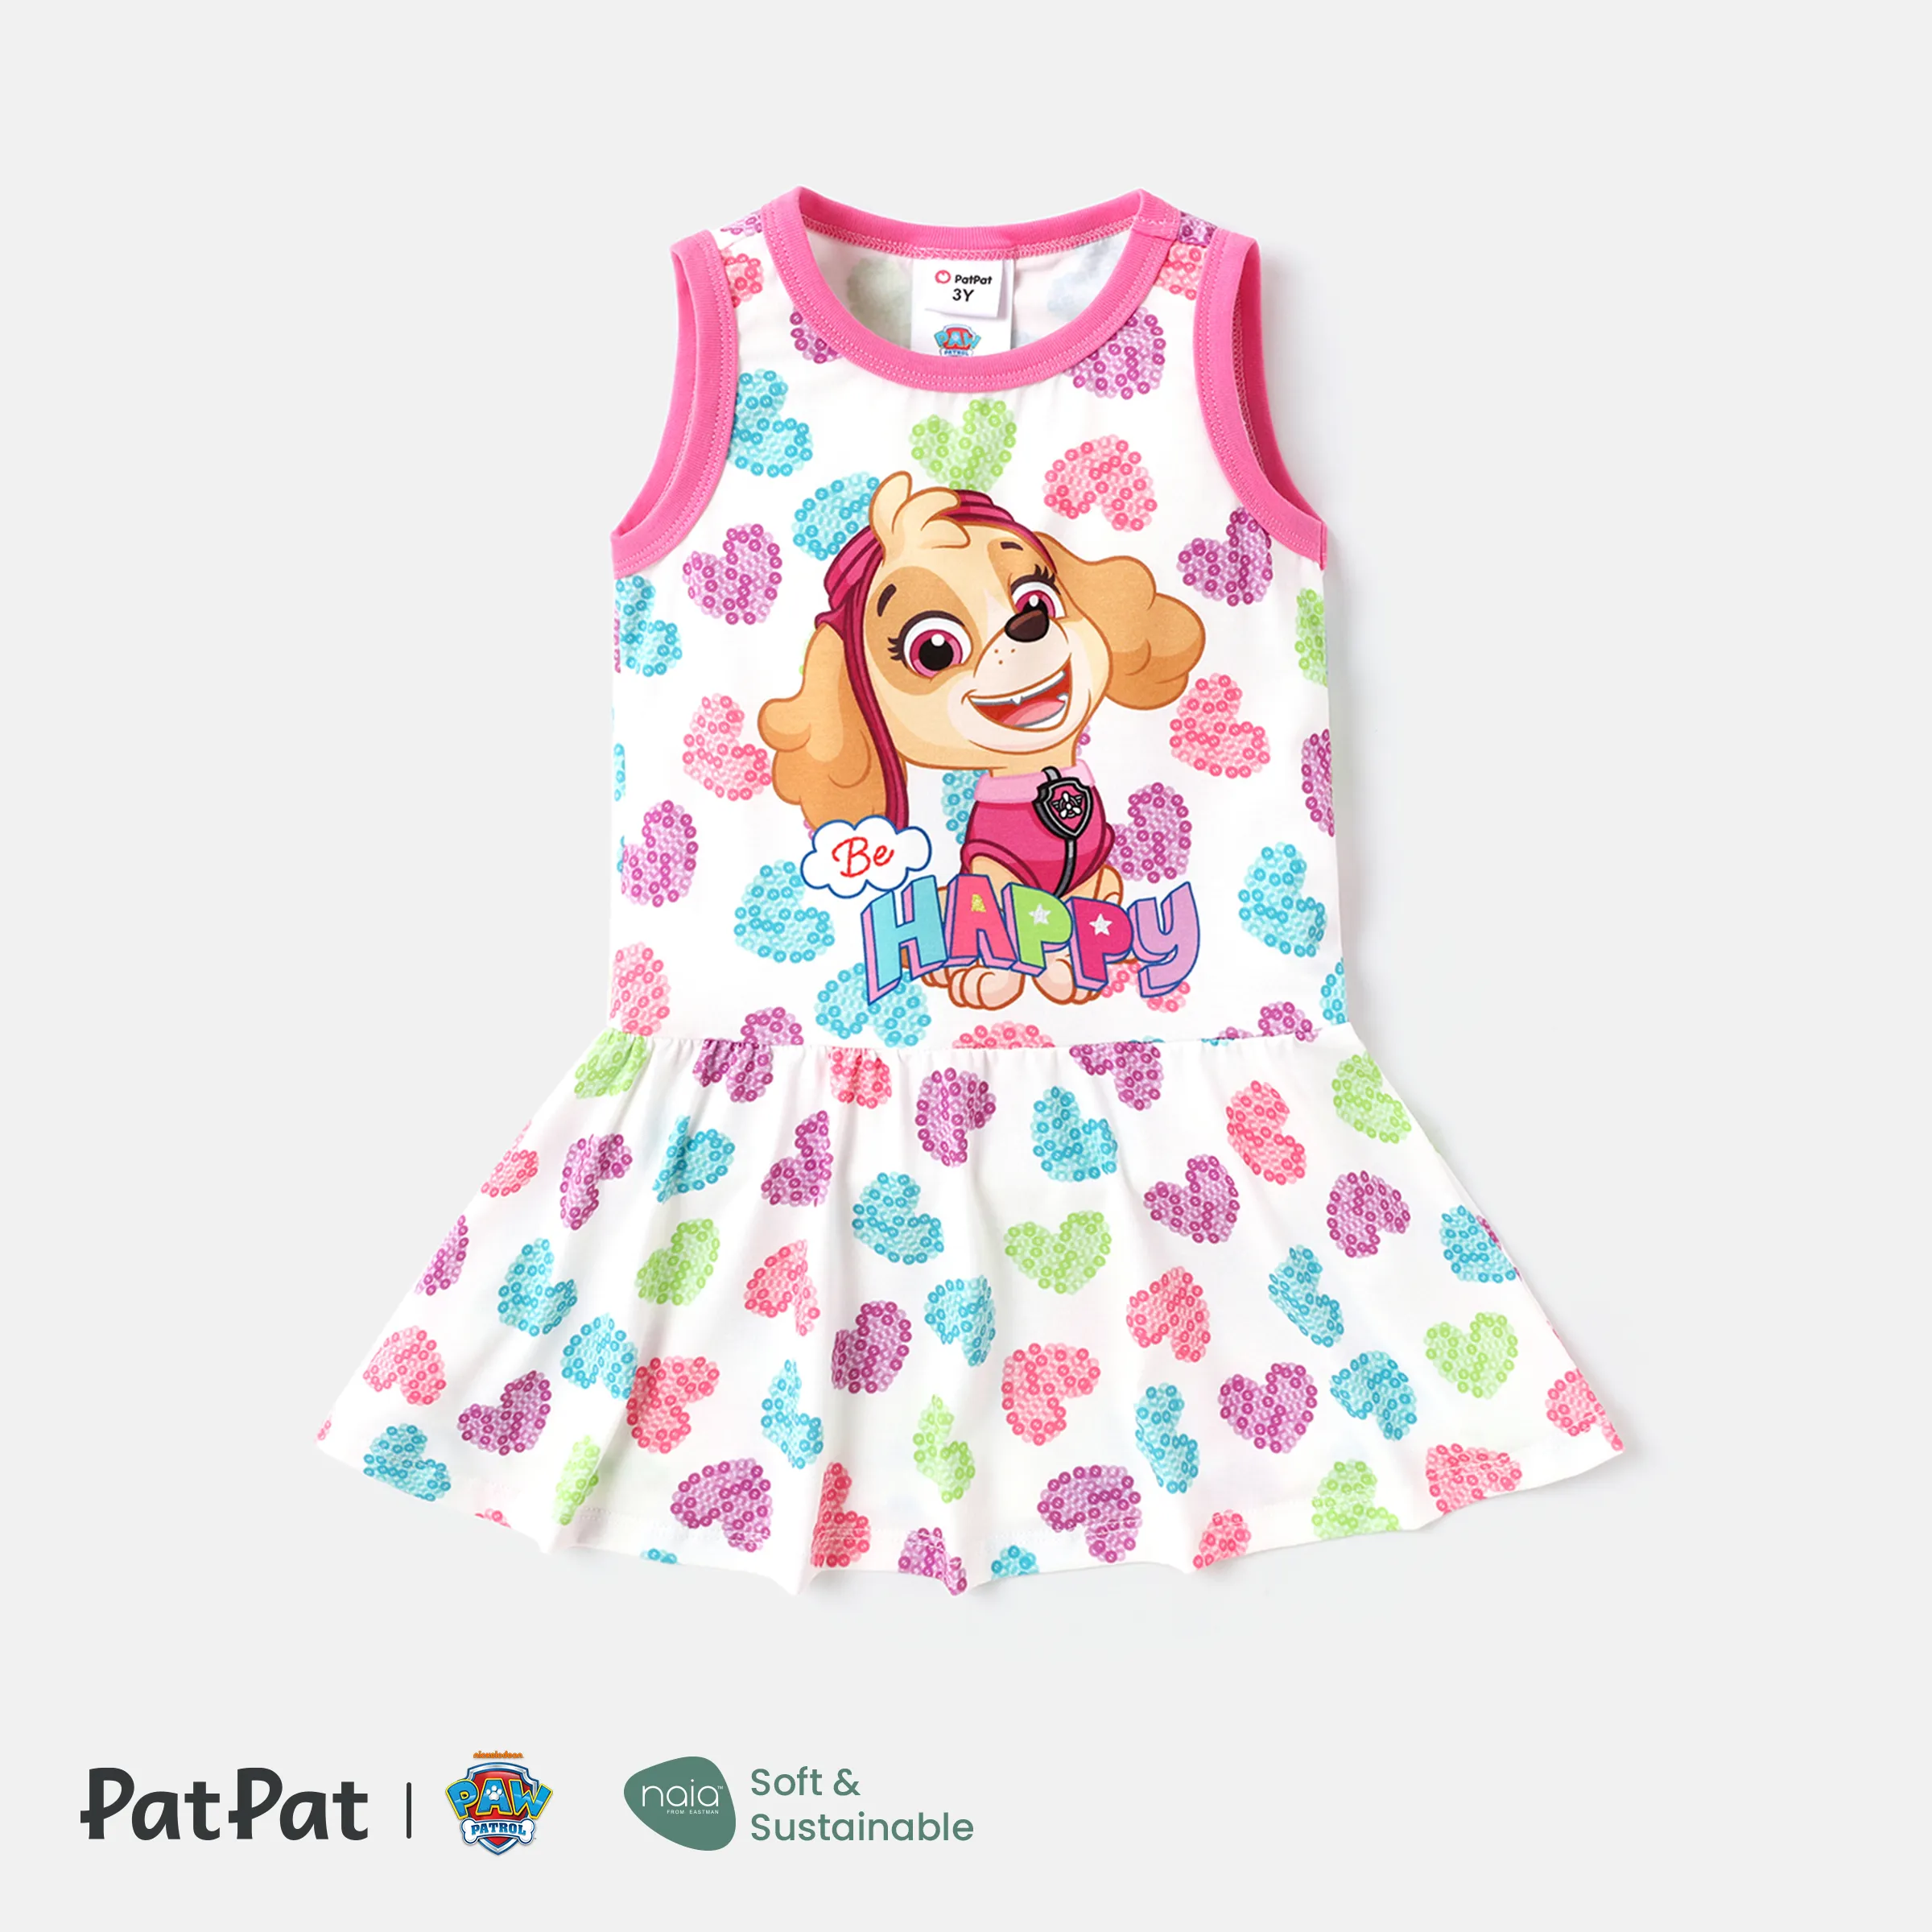 PAW Patrol Toddler Girl Heart Print Naia/Cotton Sleeveless Dress